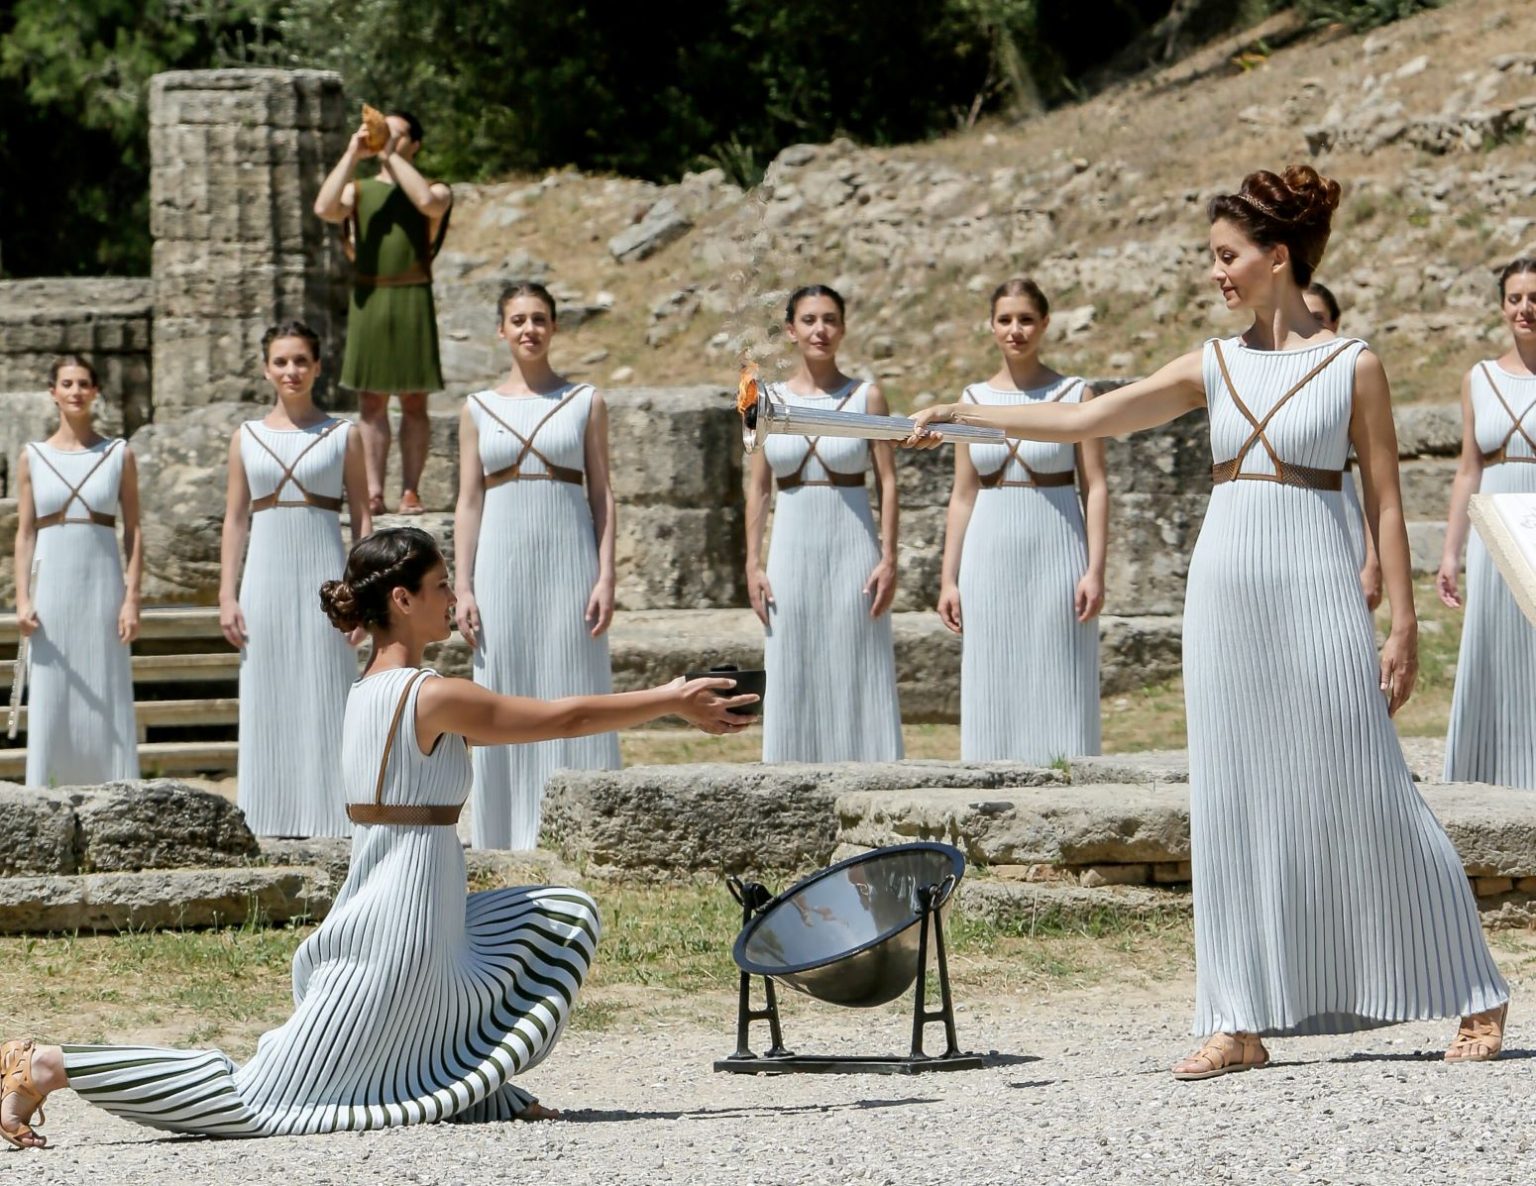 Greek kaula dance